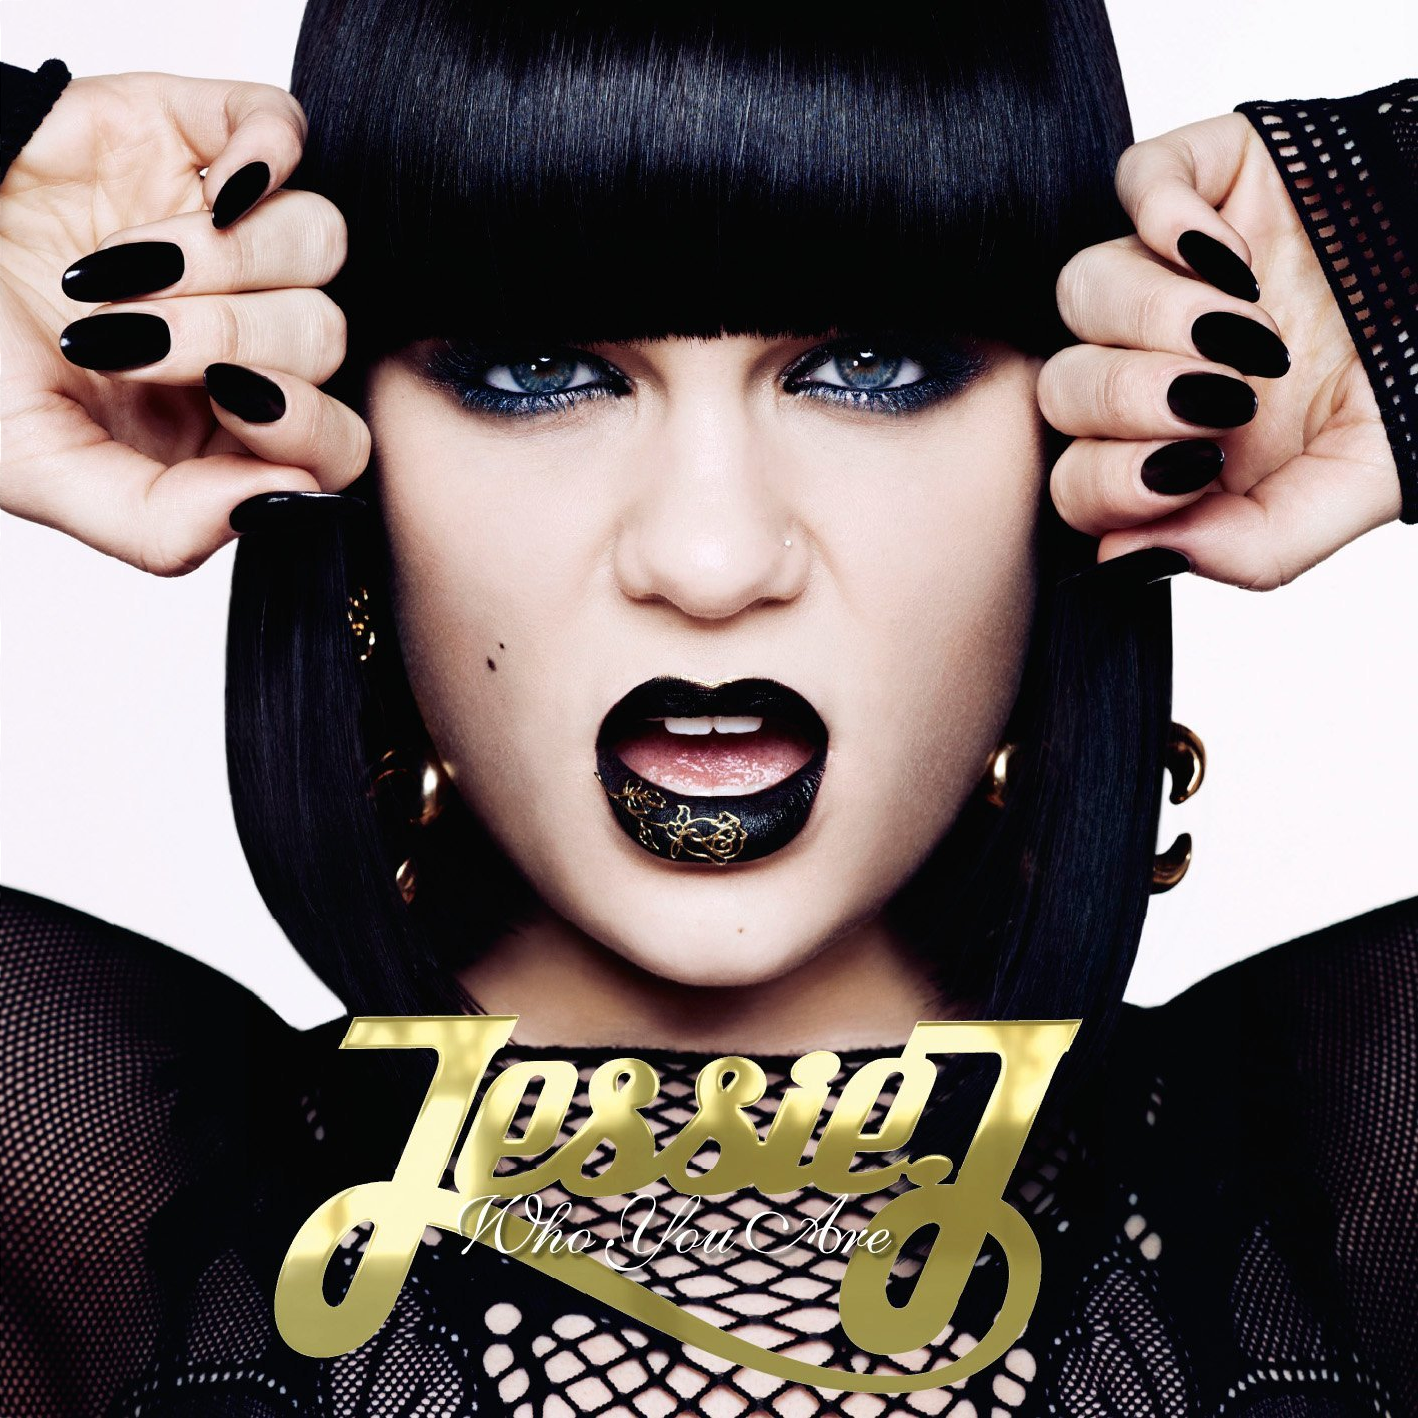 http://3.bp.blogspot.com/-t6vjjCVWrAU/ToWrXMmLUjI/AAAAAAAAMi4/TIoGZZvu5Bw/s1600/Jessie-J-Who-You-Are-Official-Album-Cover.png